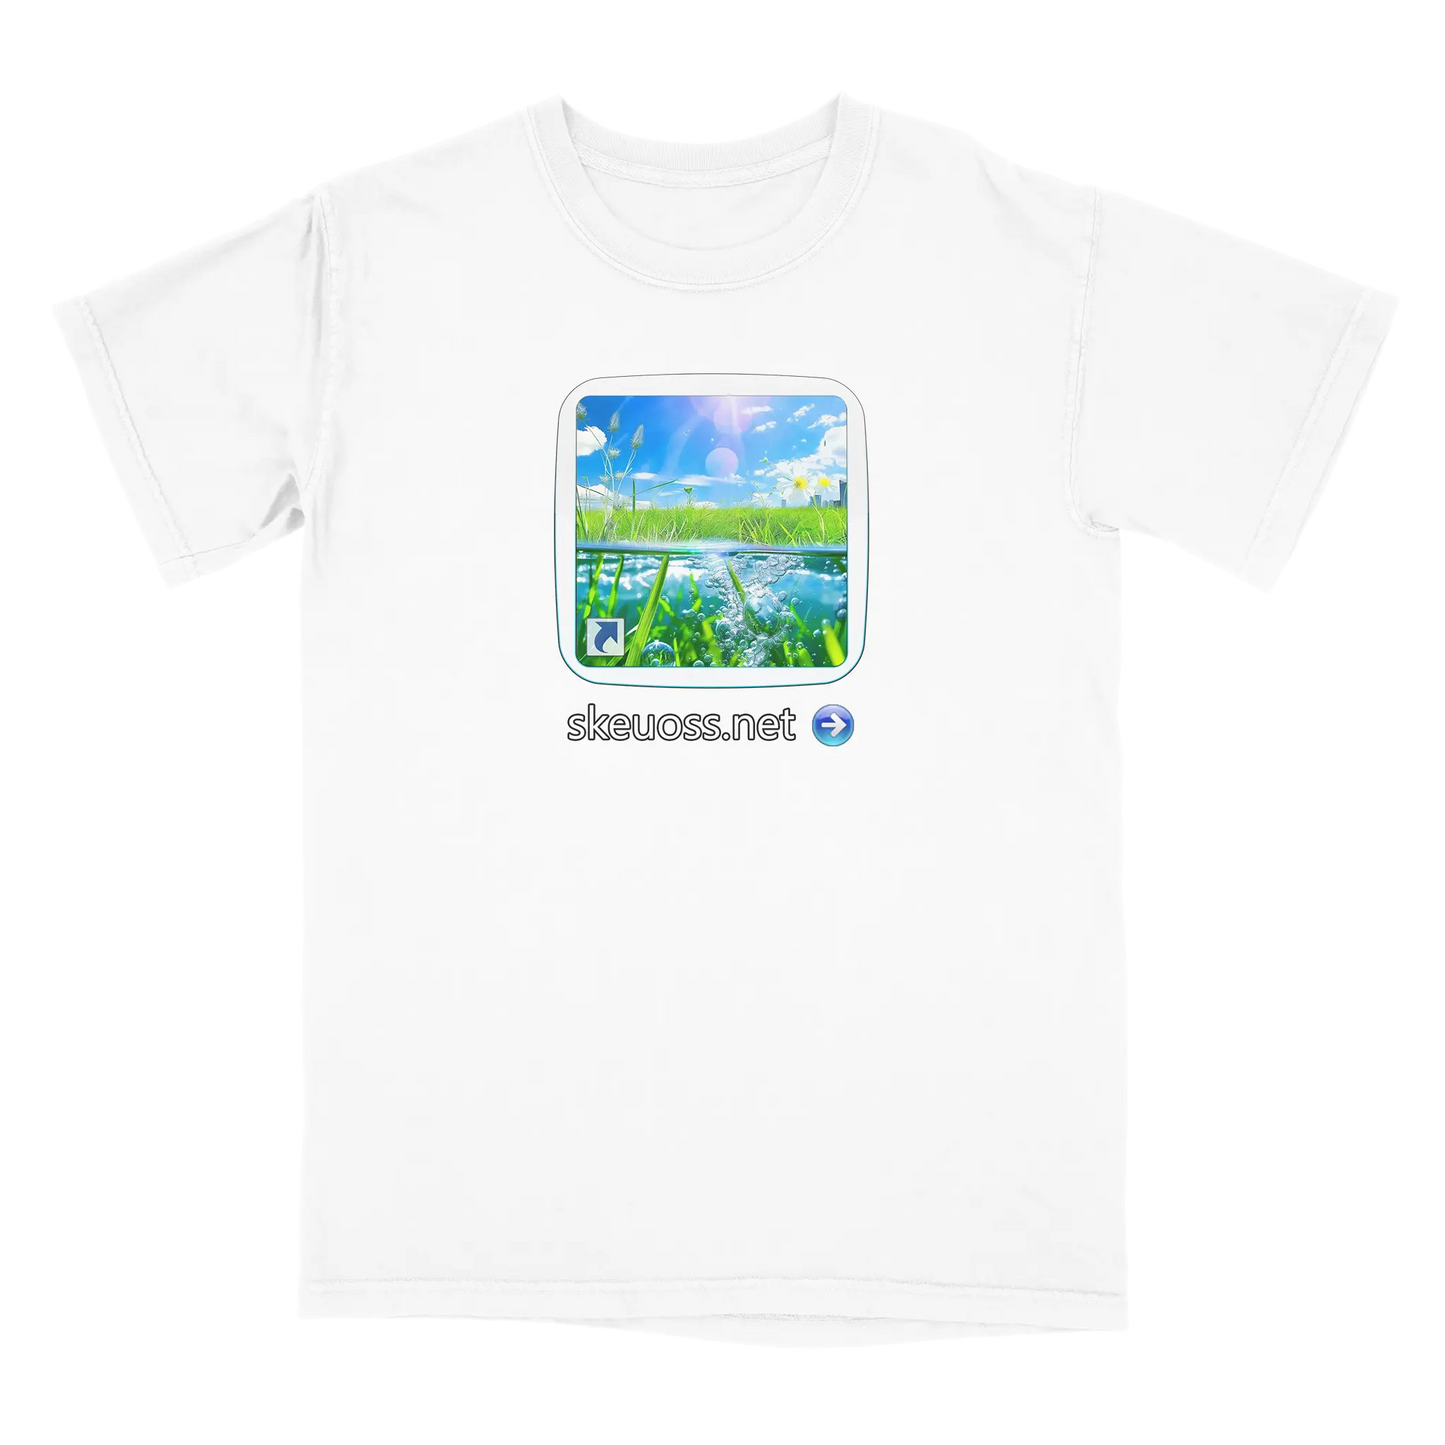 Frutiger Aero T-shirt - User Login Collection - User 195